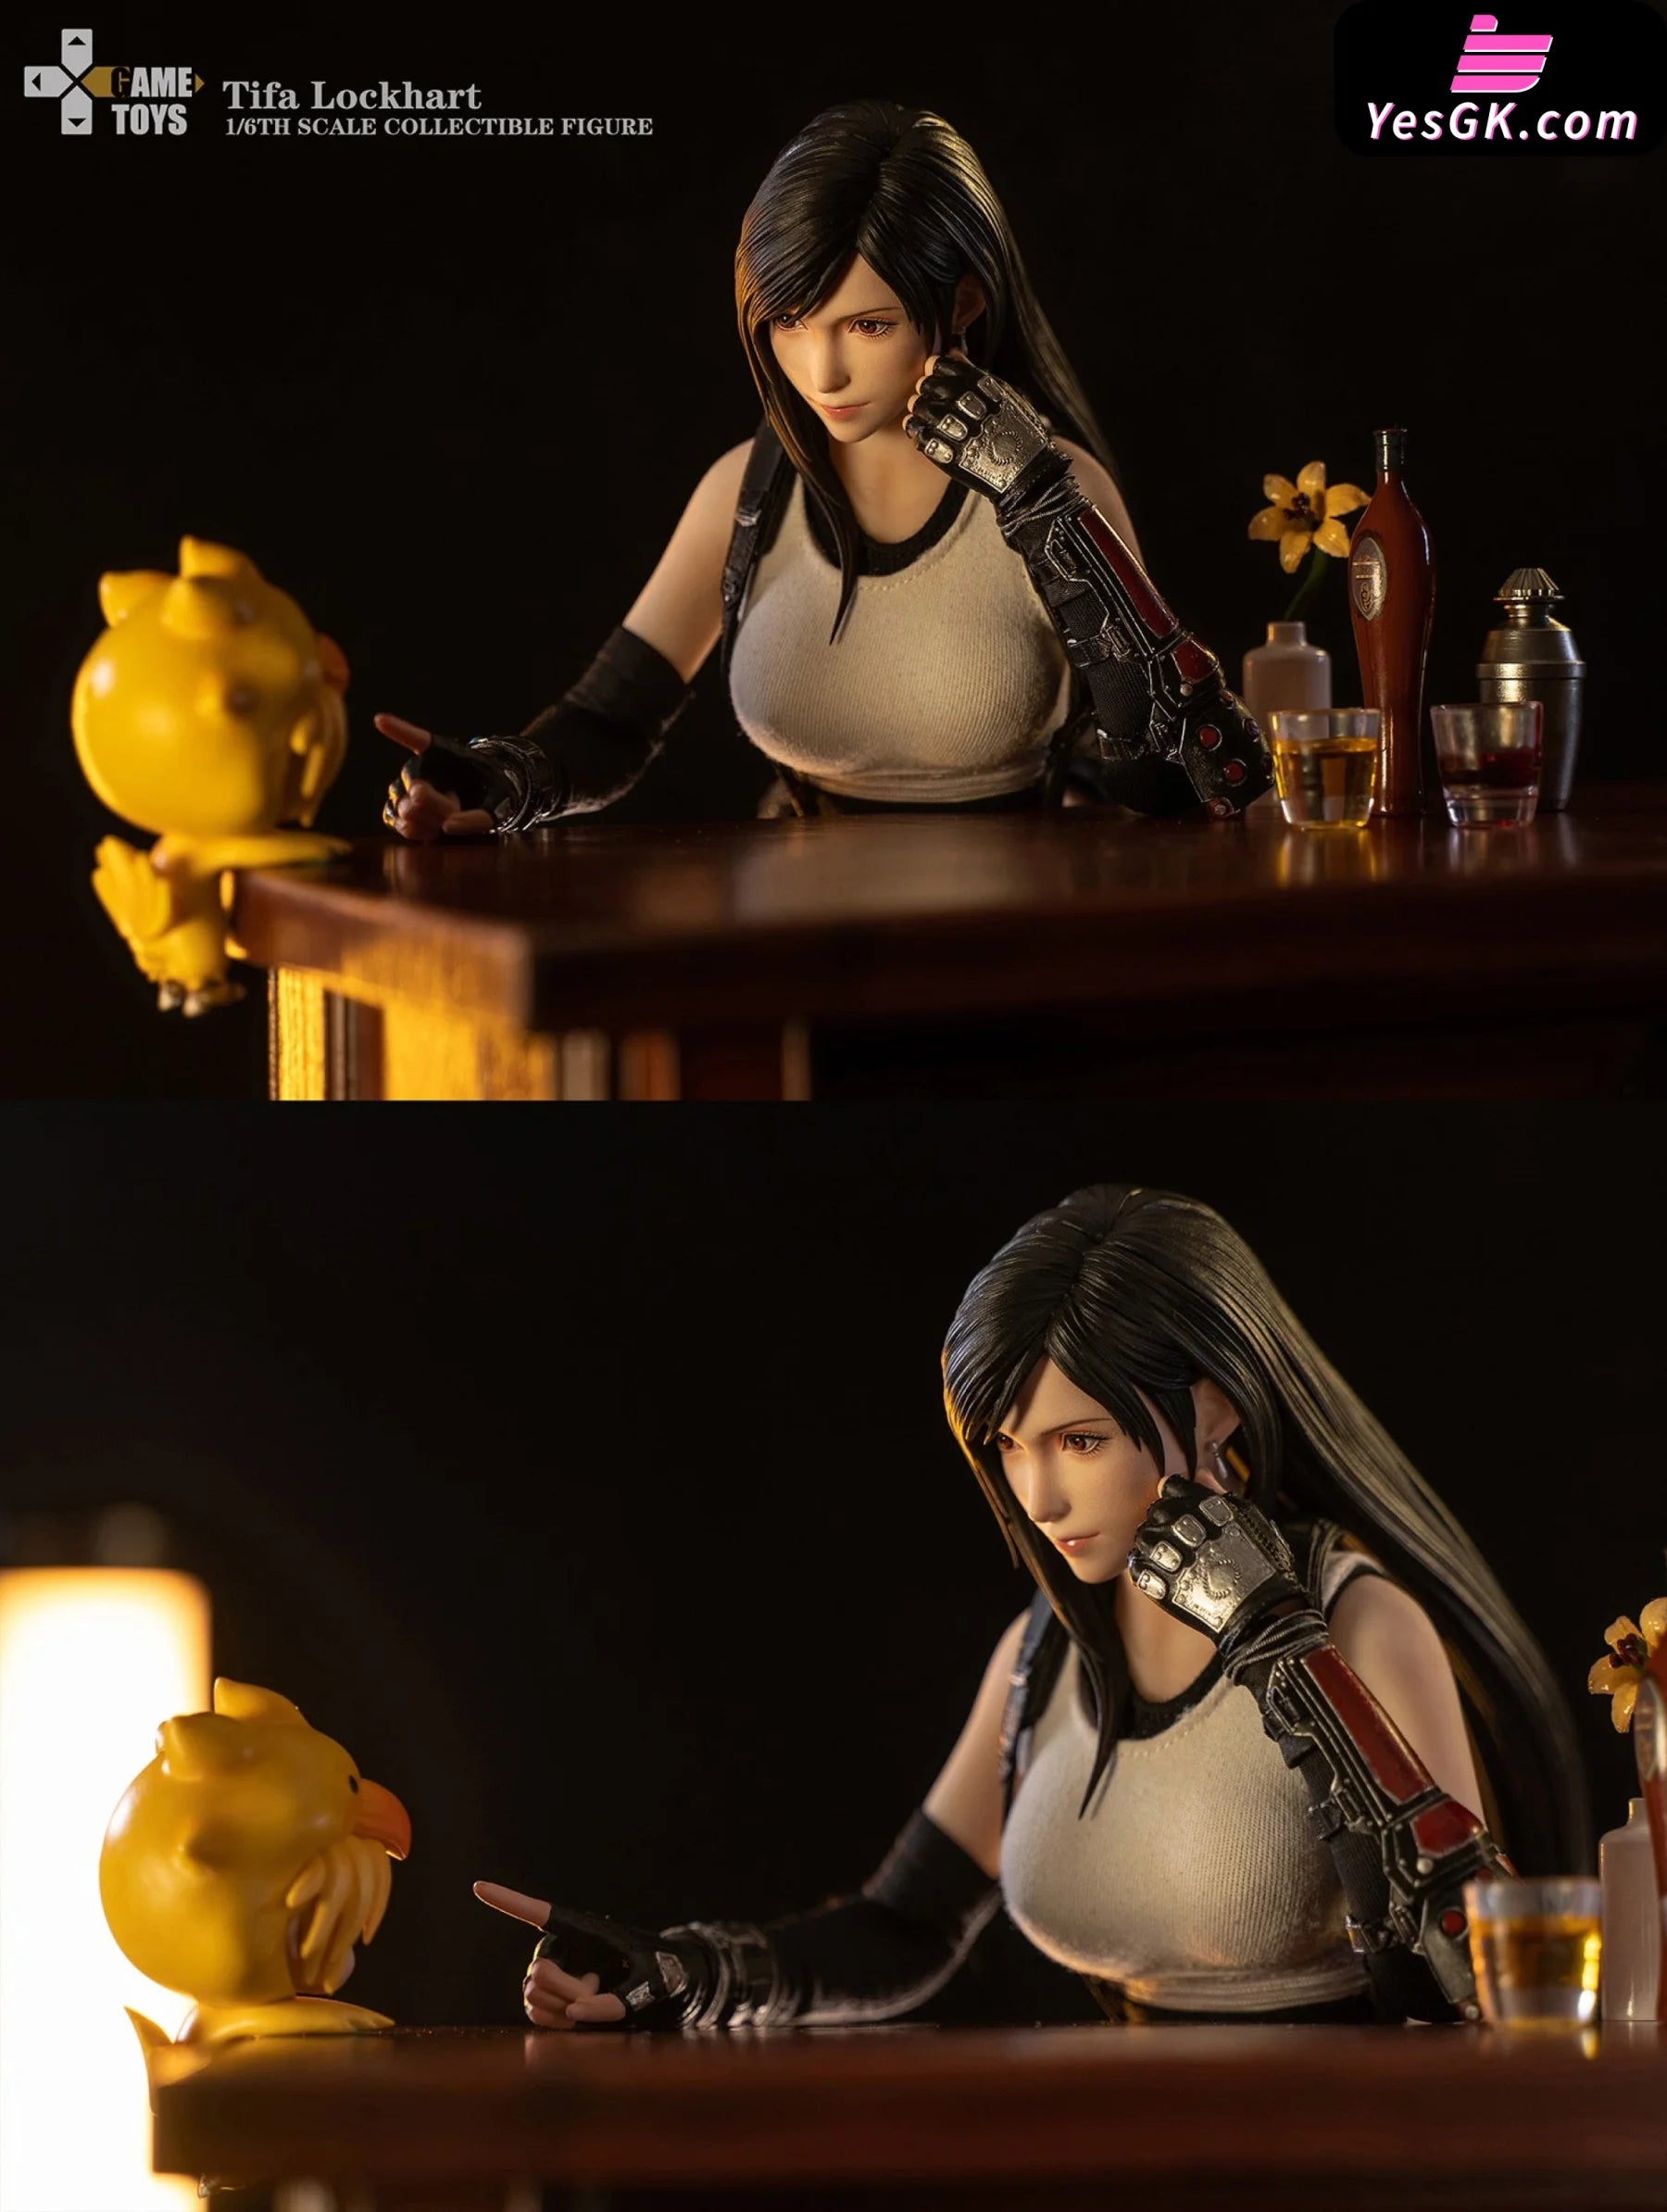 Final Fantasy Tifa Action Figure Statue - Gametoys Studio [Pre-Order]